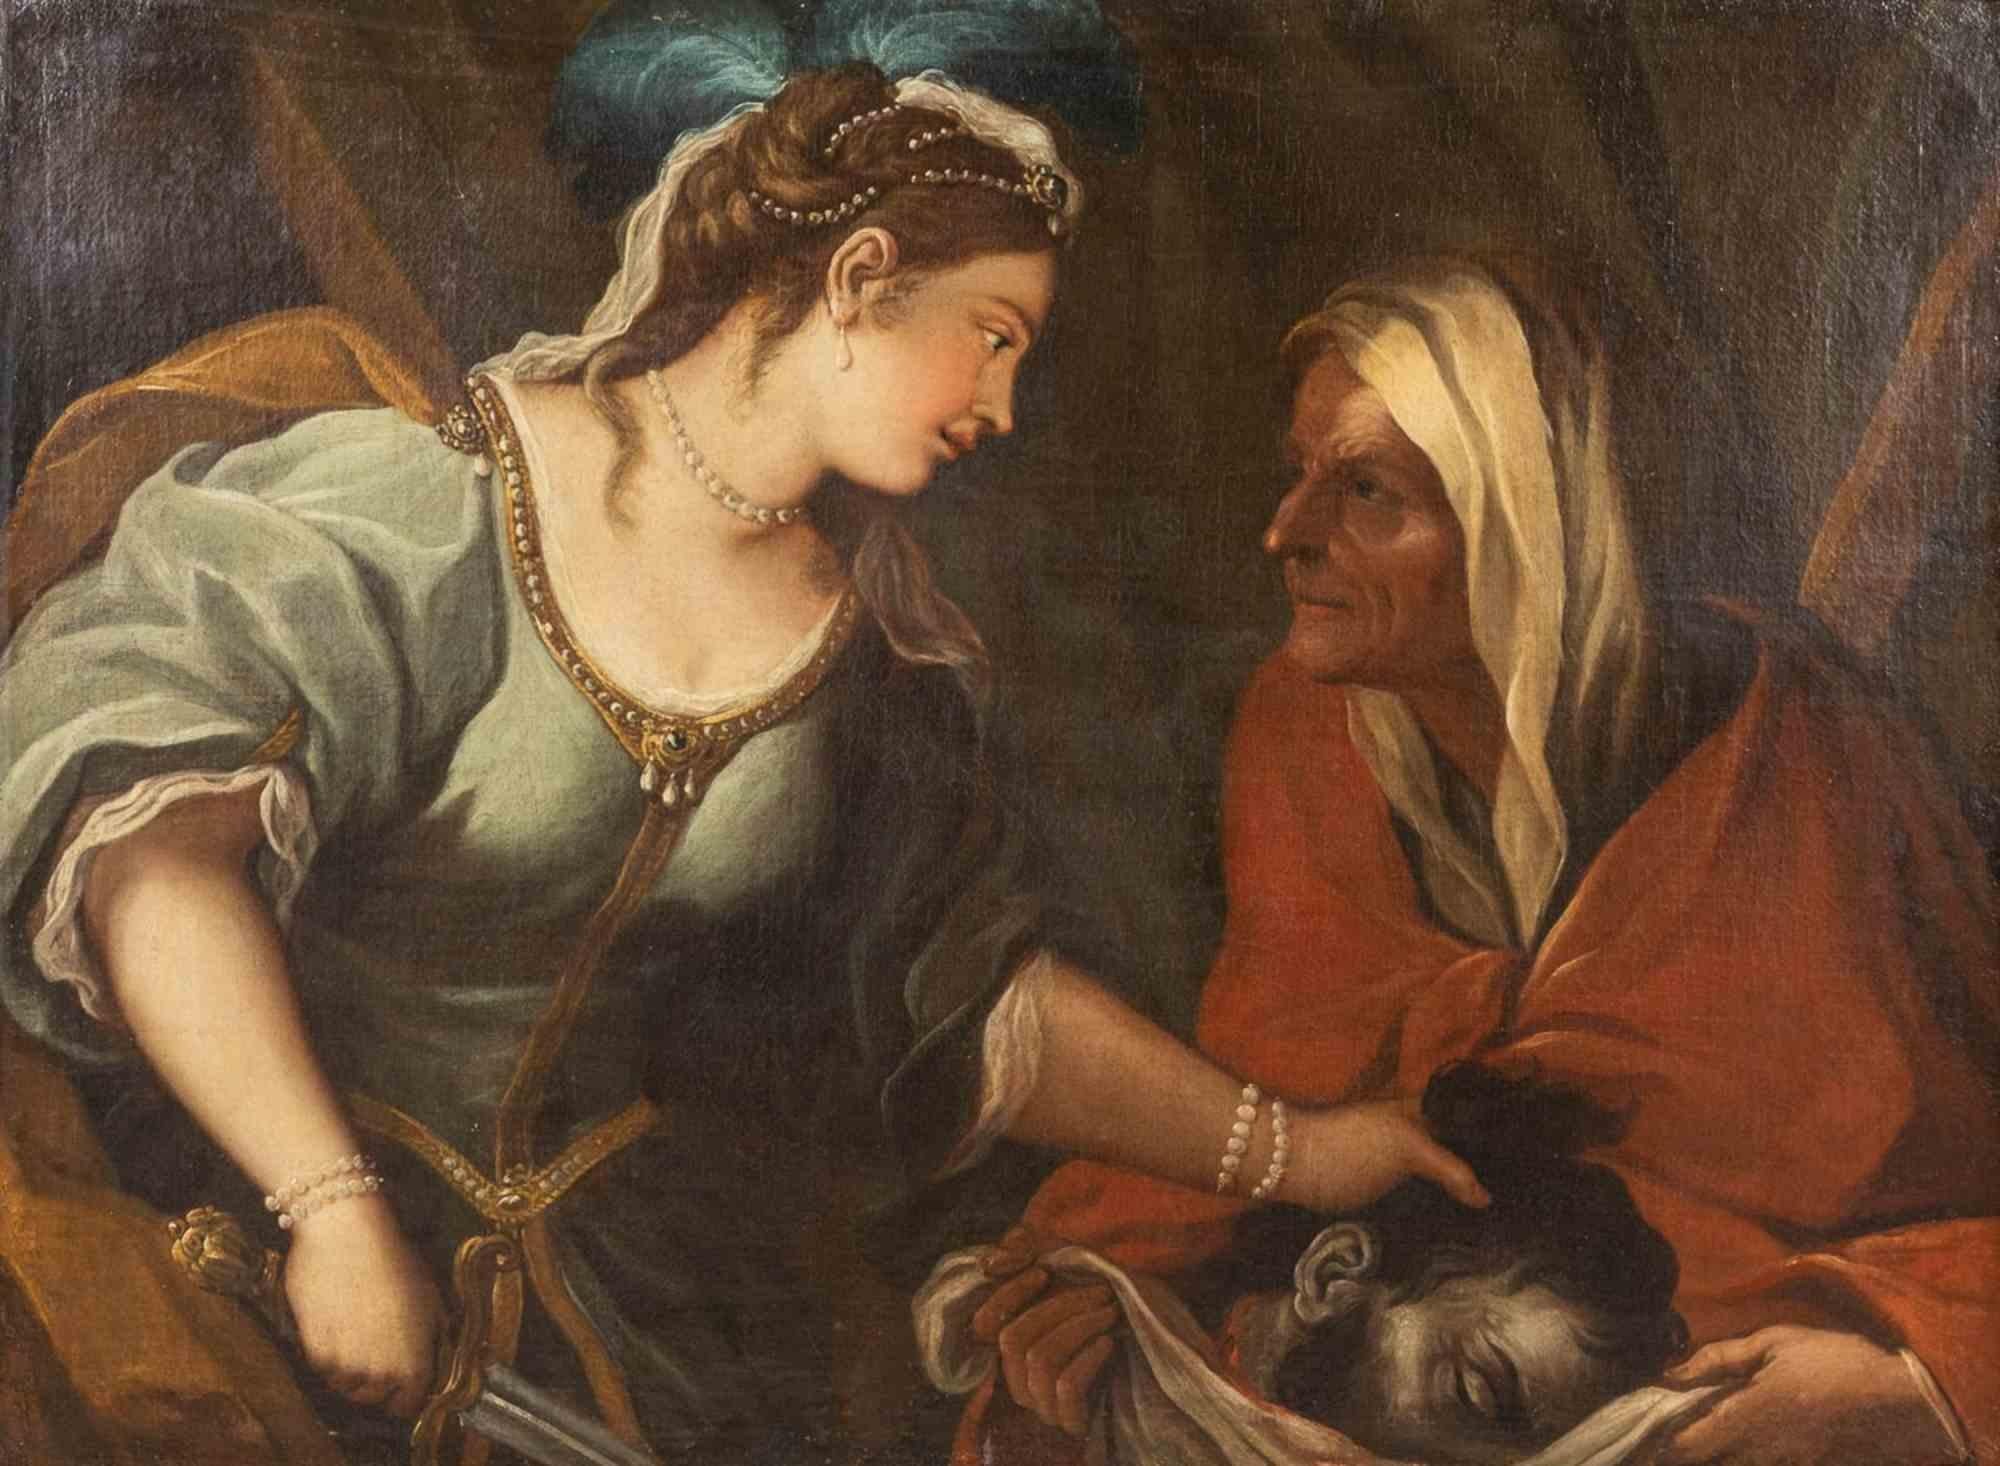 Giovanni Raffaele Badaracco Figurative Painting - Judith Beheading Holoferne - Oil painting by G.R. Badaracco - Late 17th Century